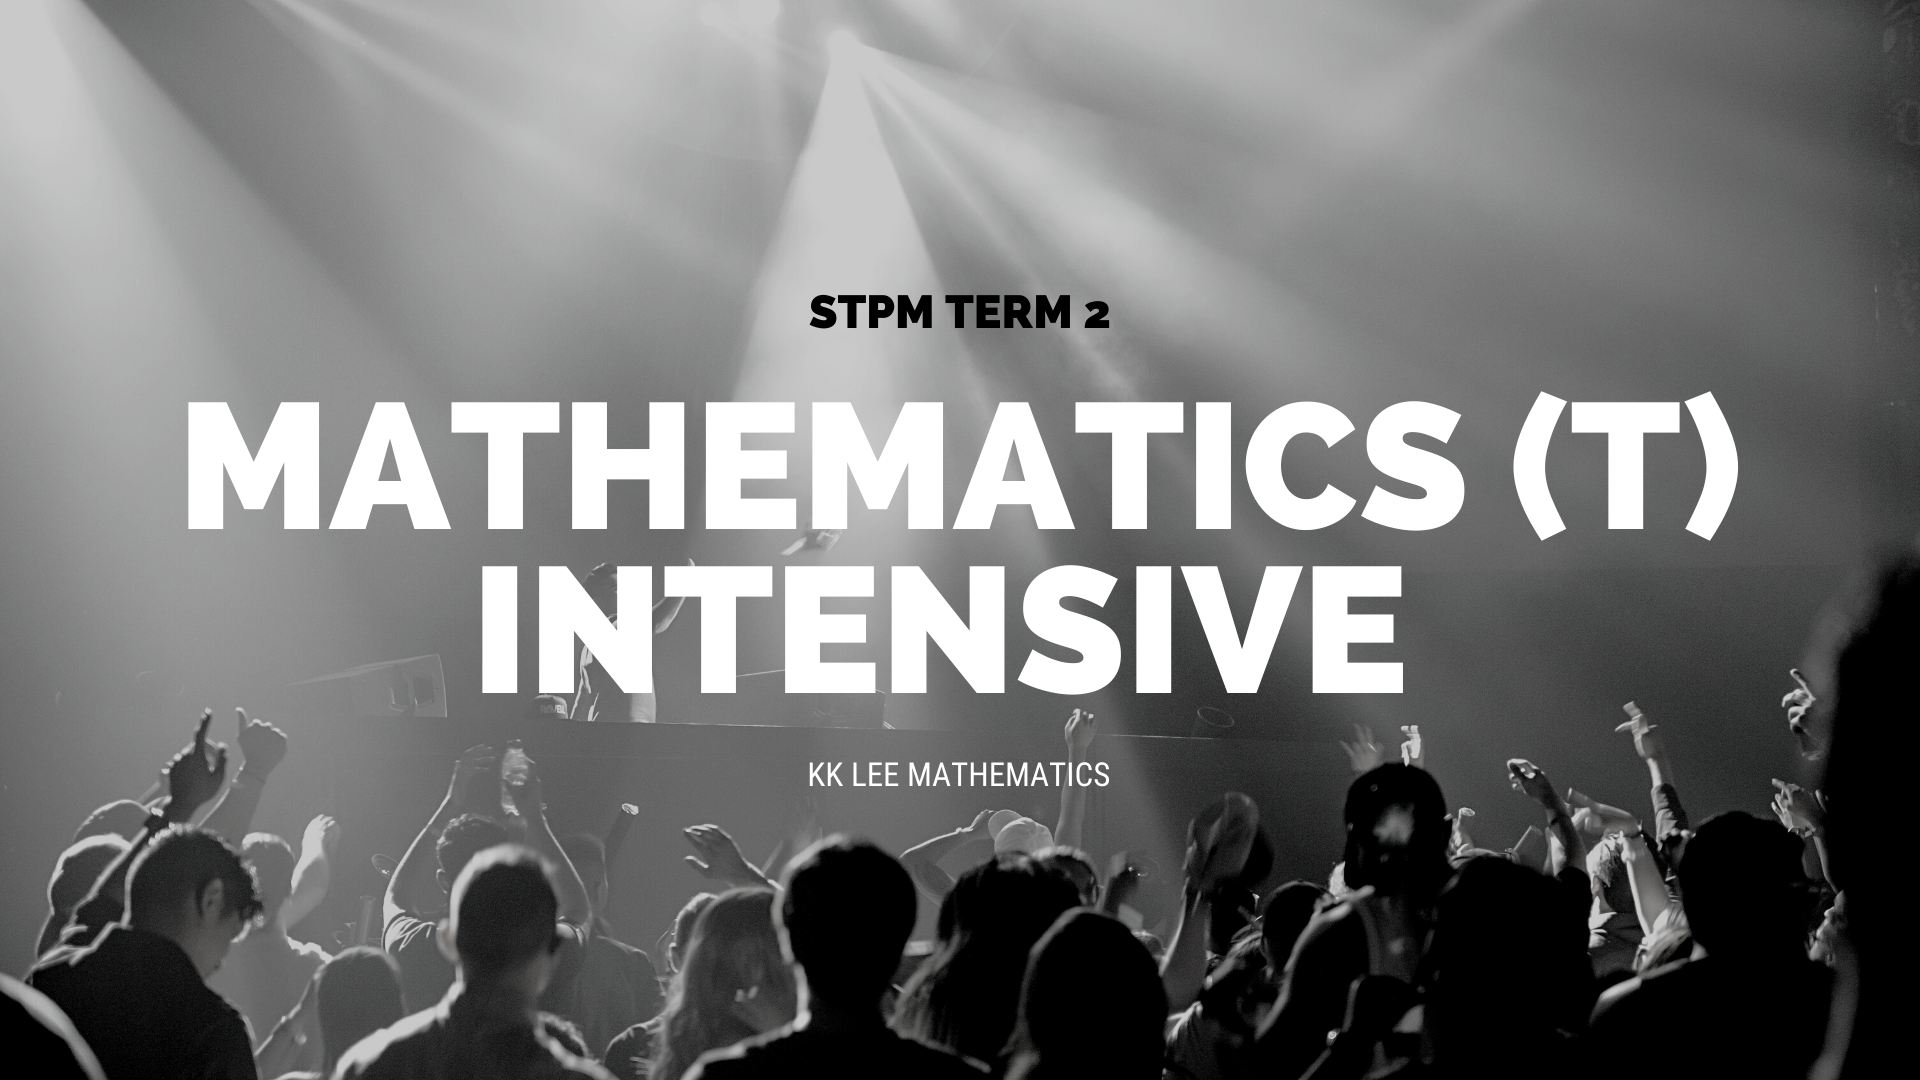 STPM TERM 2 MATHEMATICS (T) INTENSIVE (KK LEE MATHEMATICS)